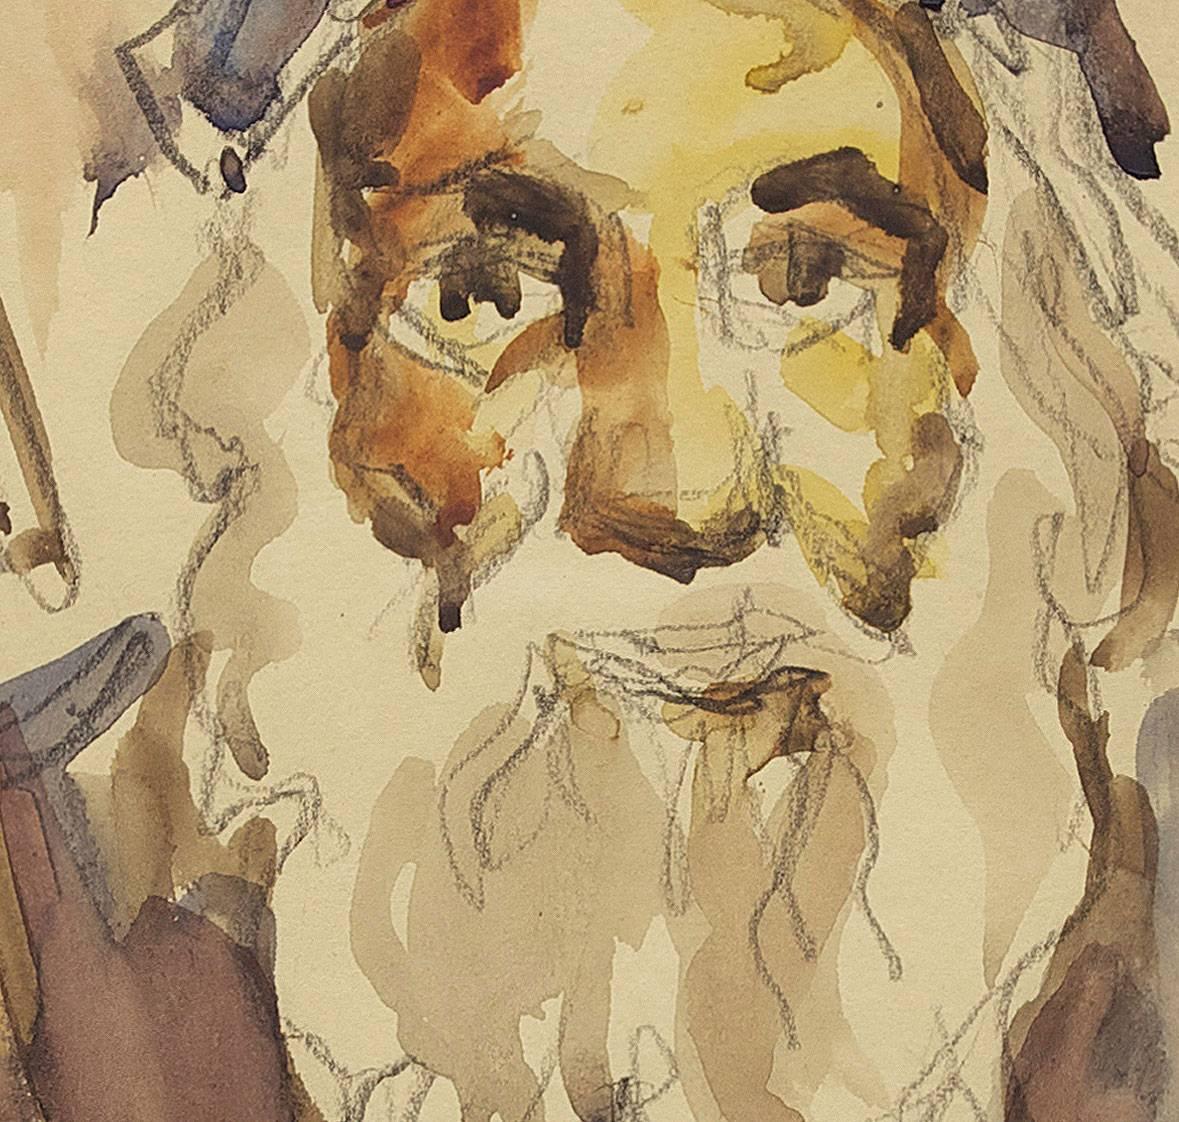 Vieux rabbin tenant une canne - Art de David Gilboa